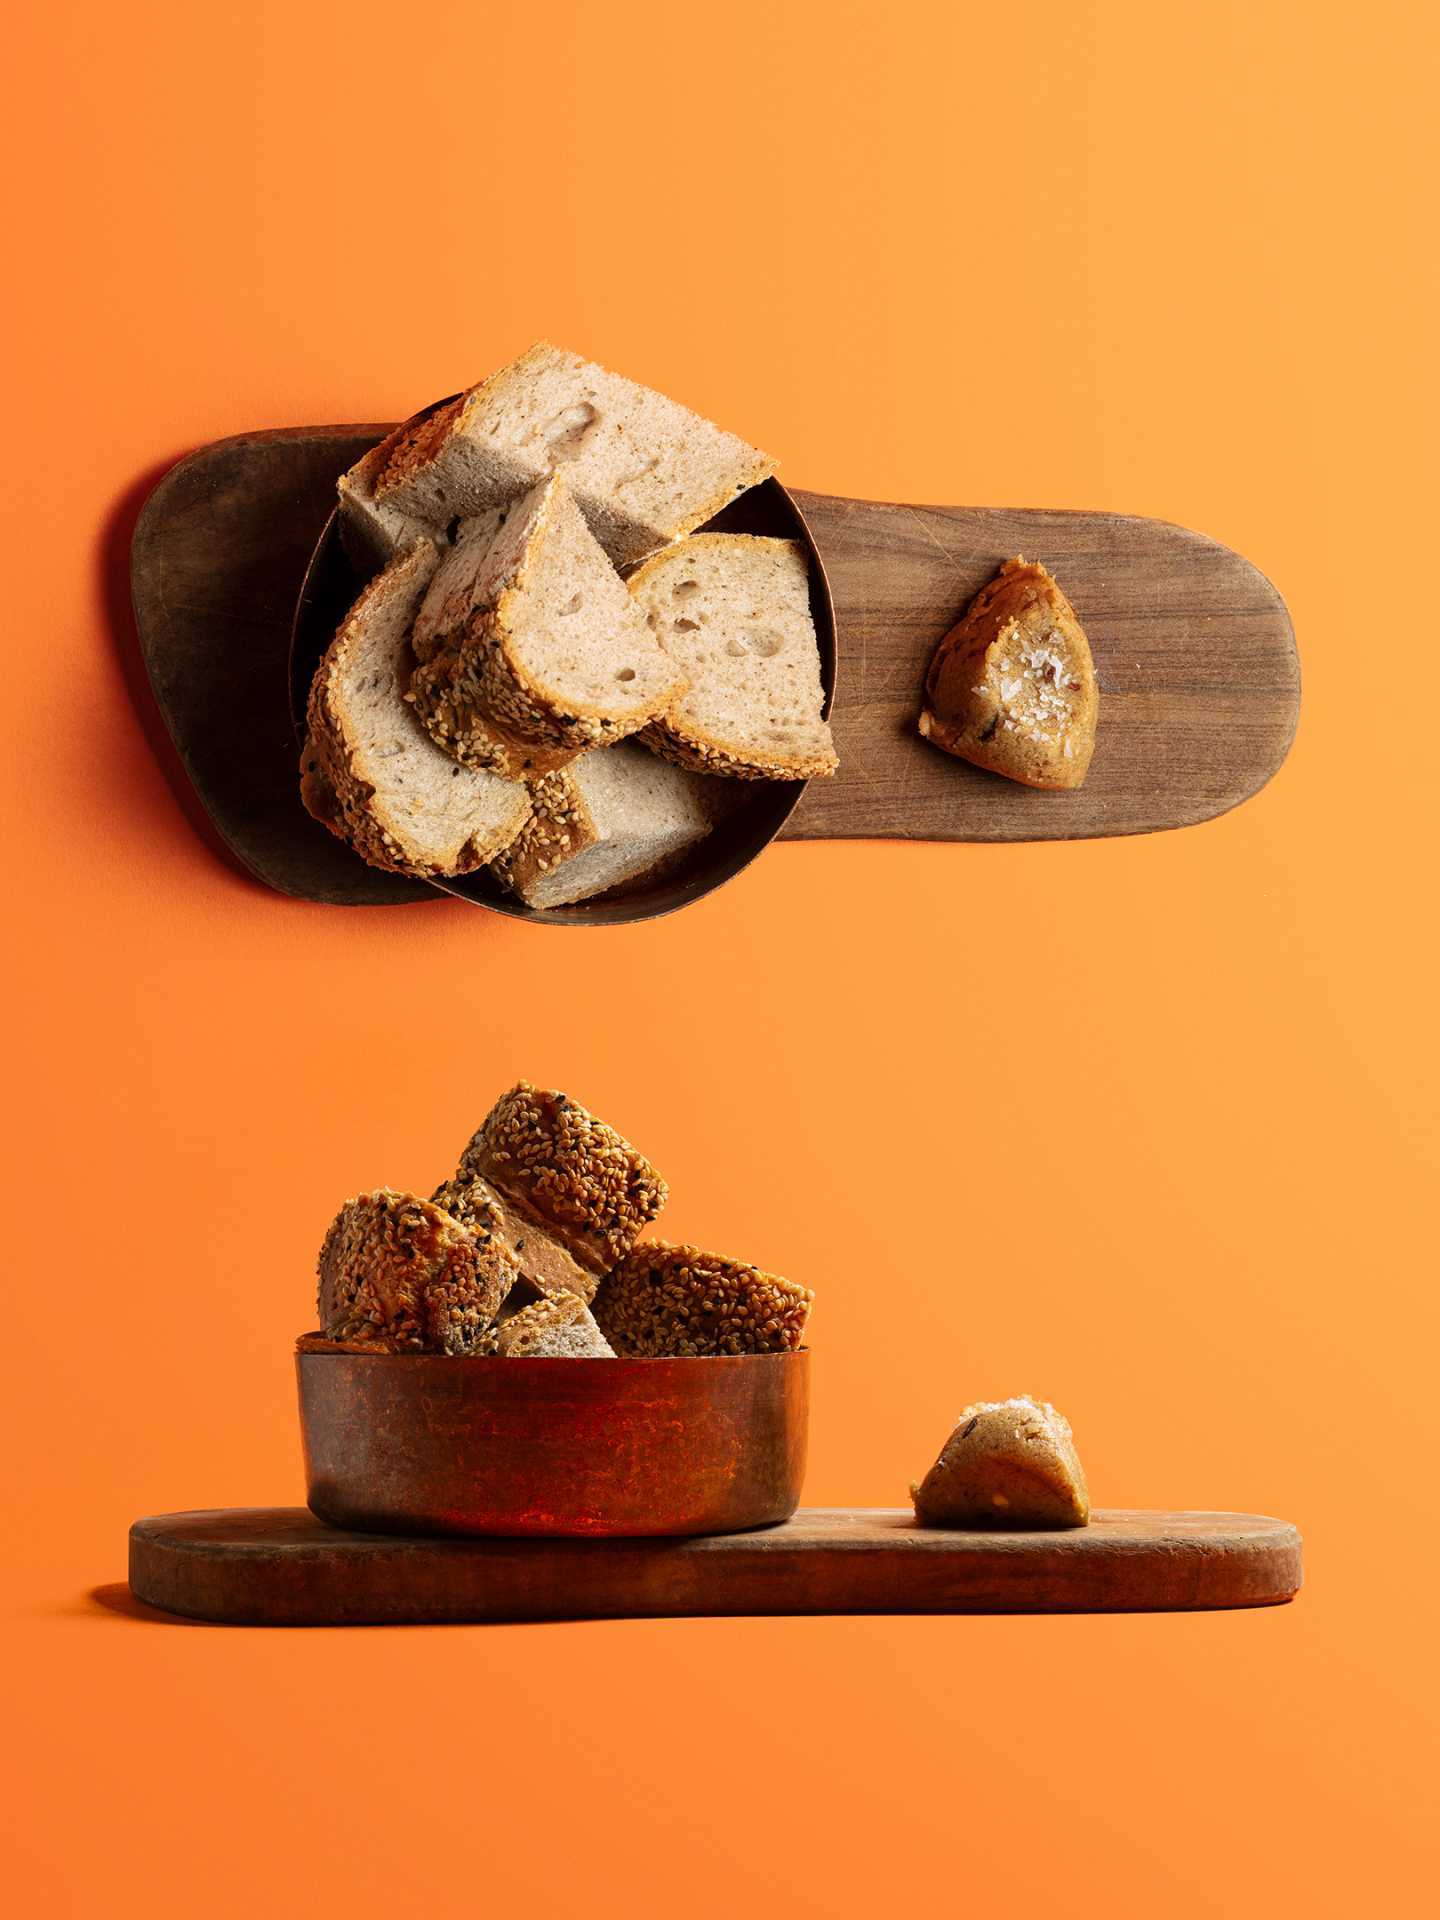 Selin Kiazim's spiced bread and medjool date butter